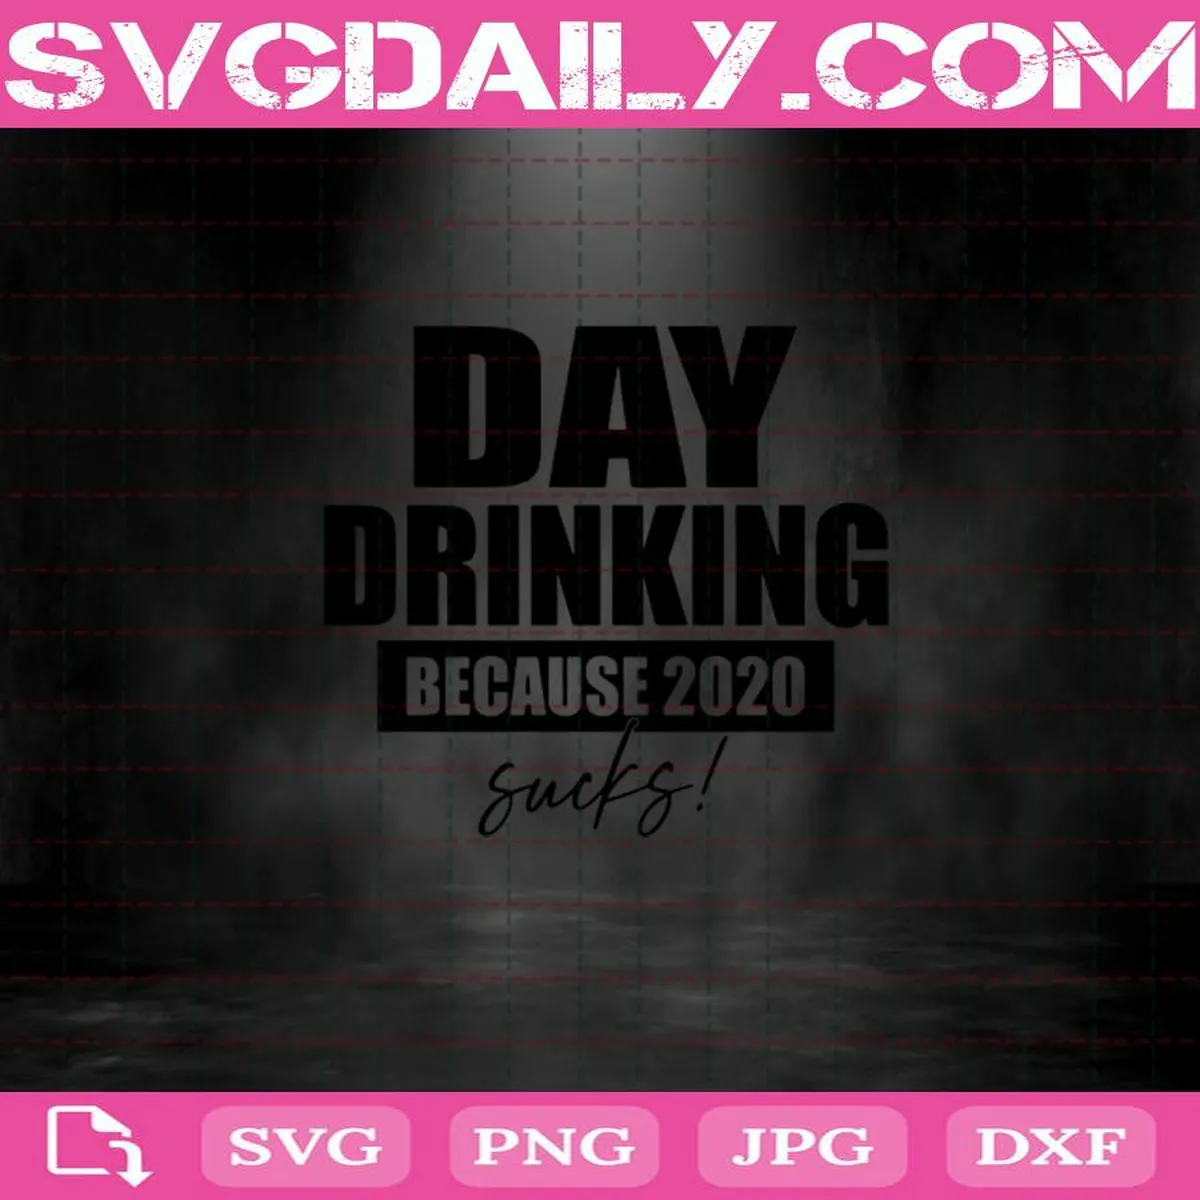 Day Drinking Because 2020 Sucks Svg, Day Drinking Svg, Drinking Because Svg, Drinking Svg, Because 2020 Sucks Svg